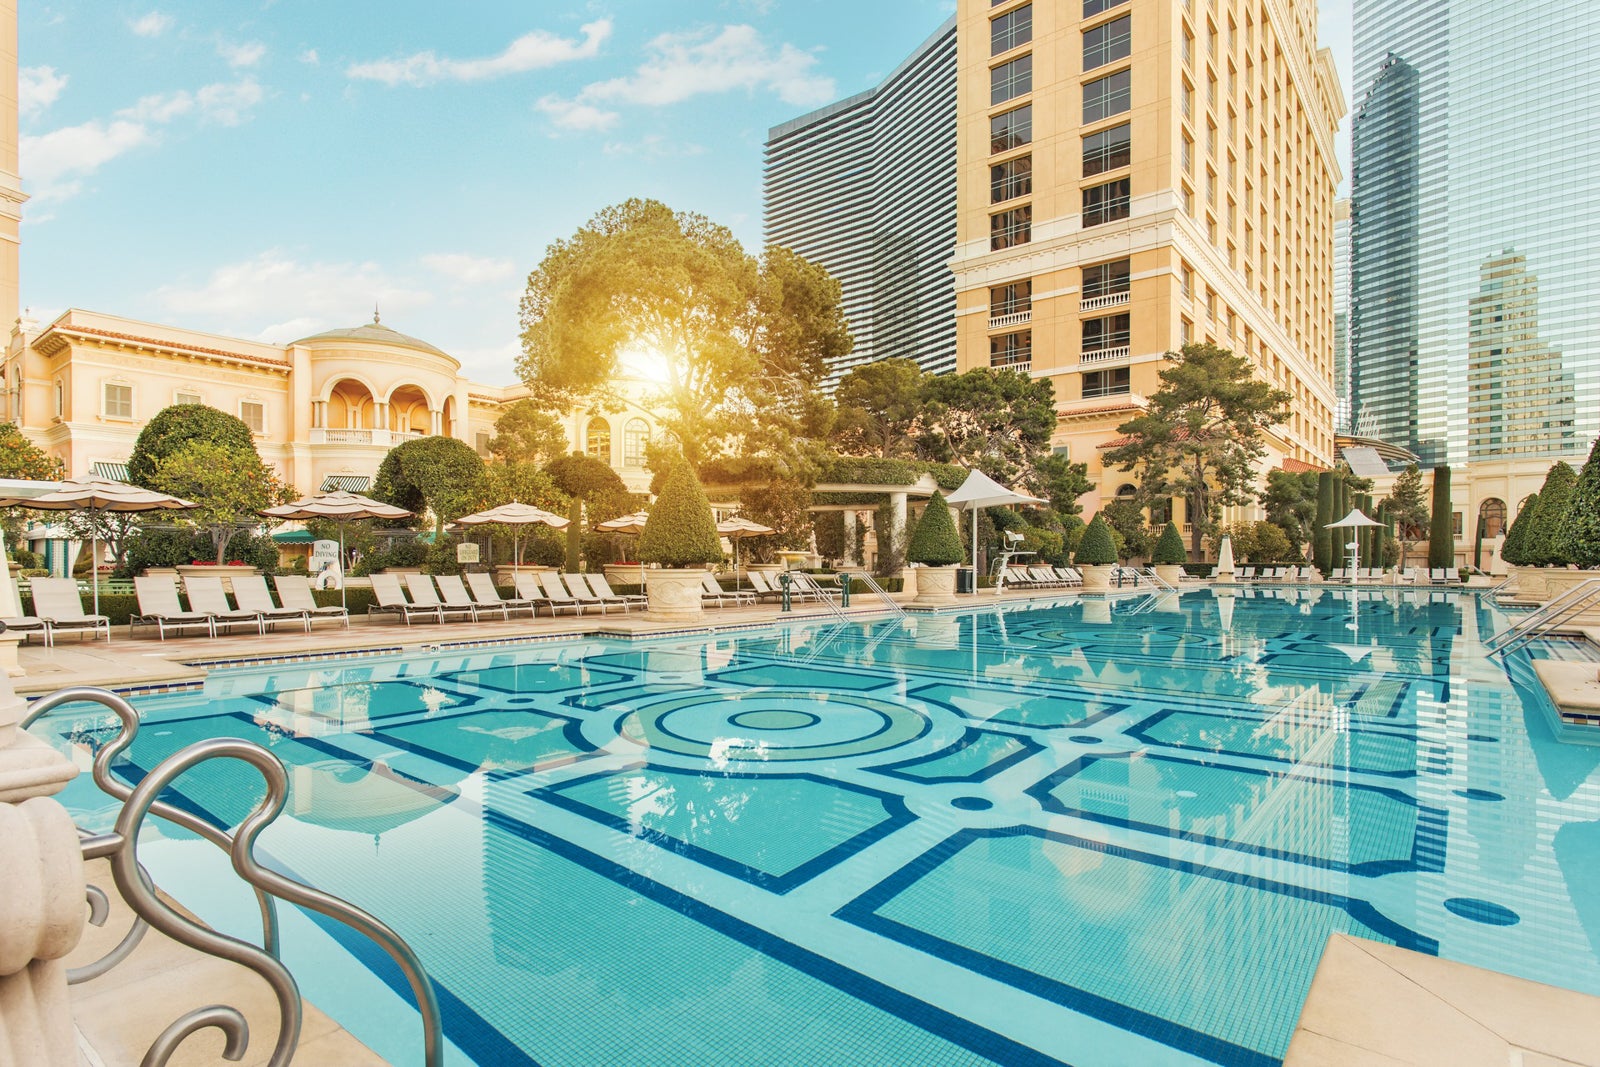 Jackpot! Best hotels in Vegas for a Sin City getaway